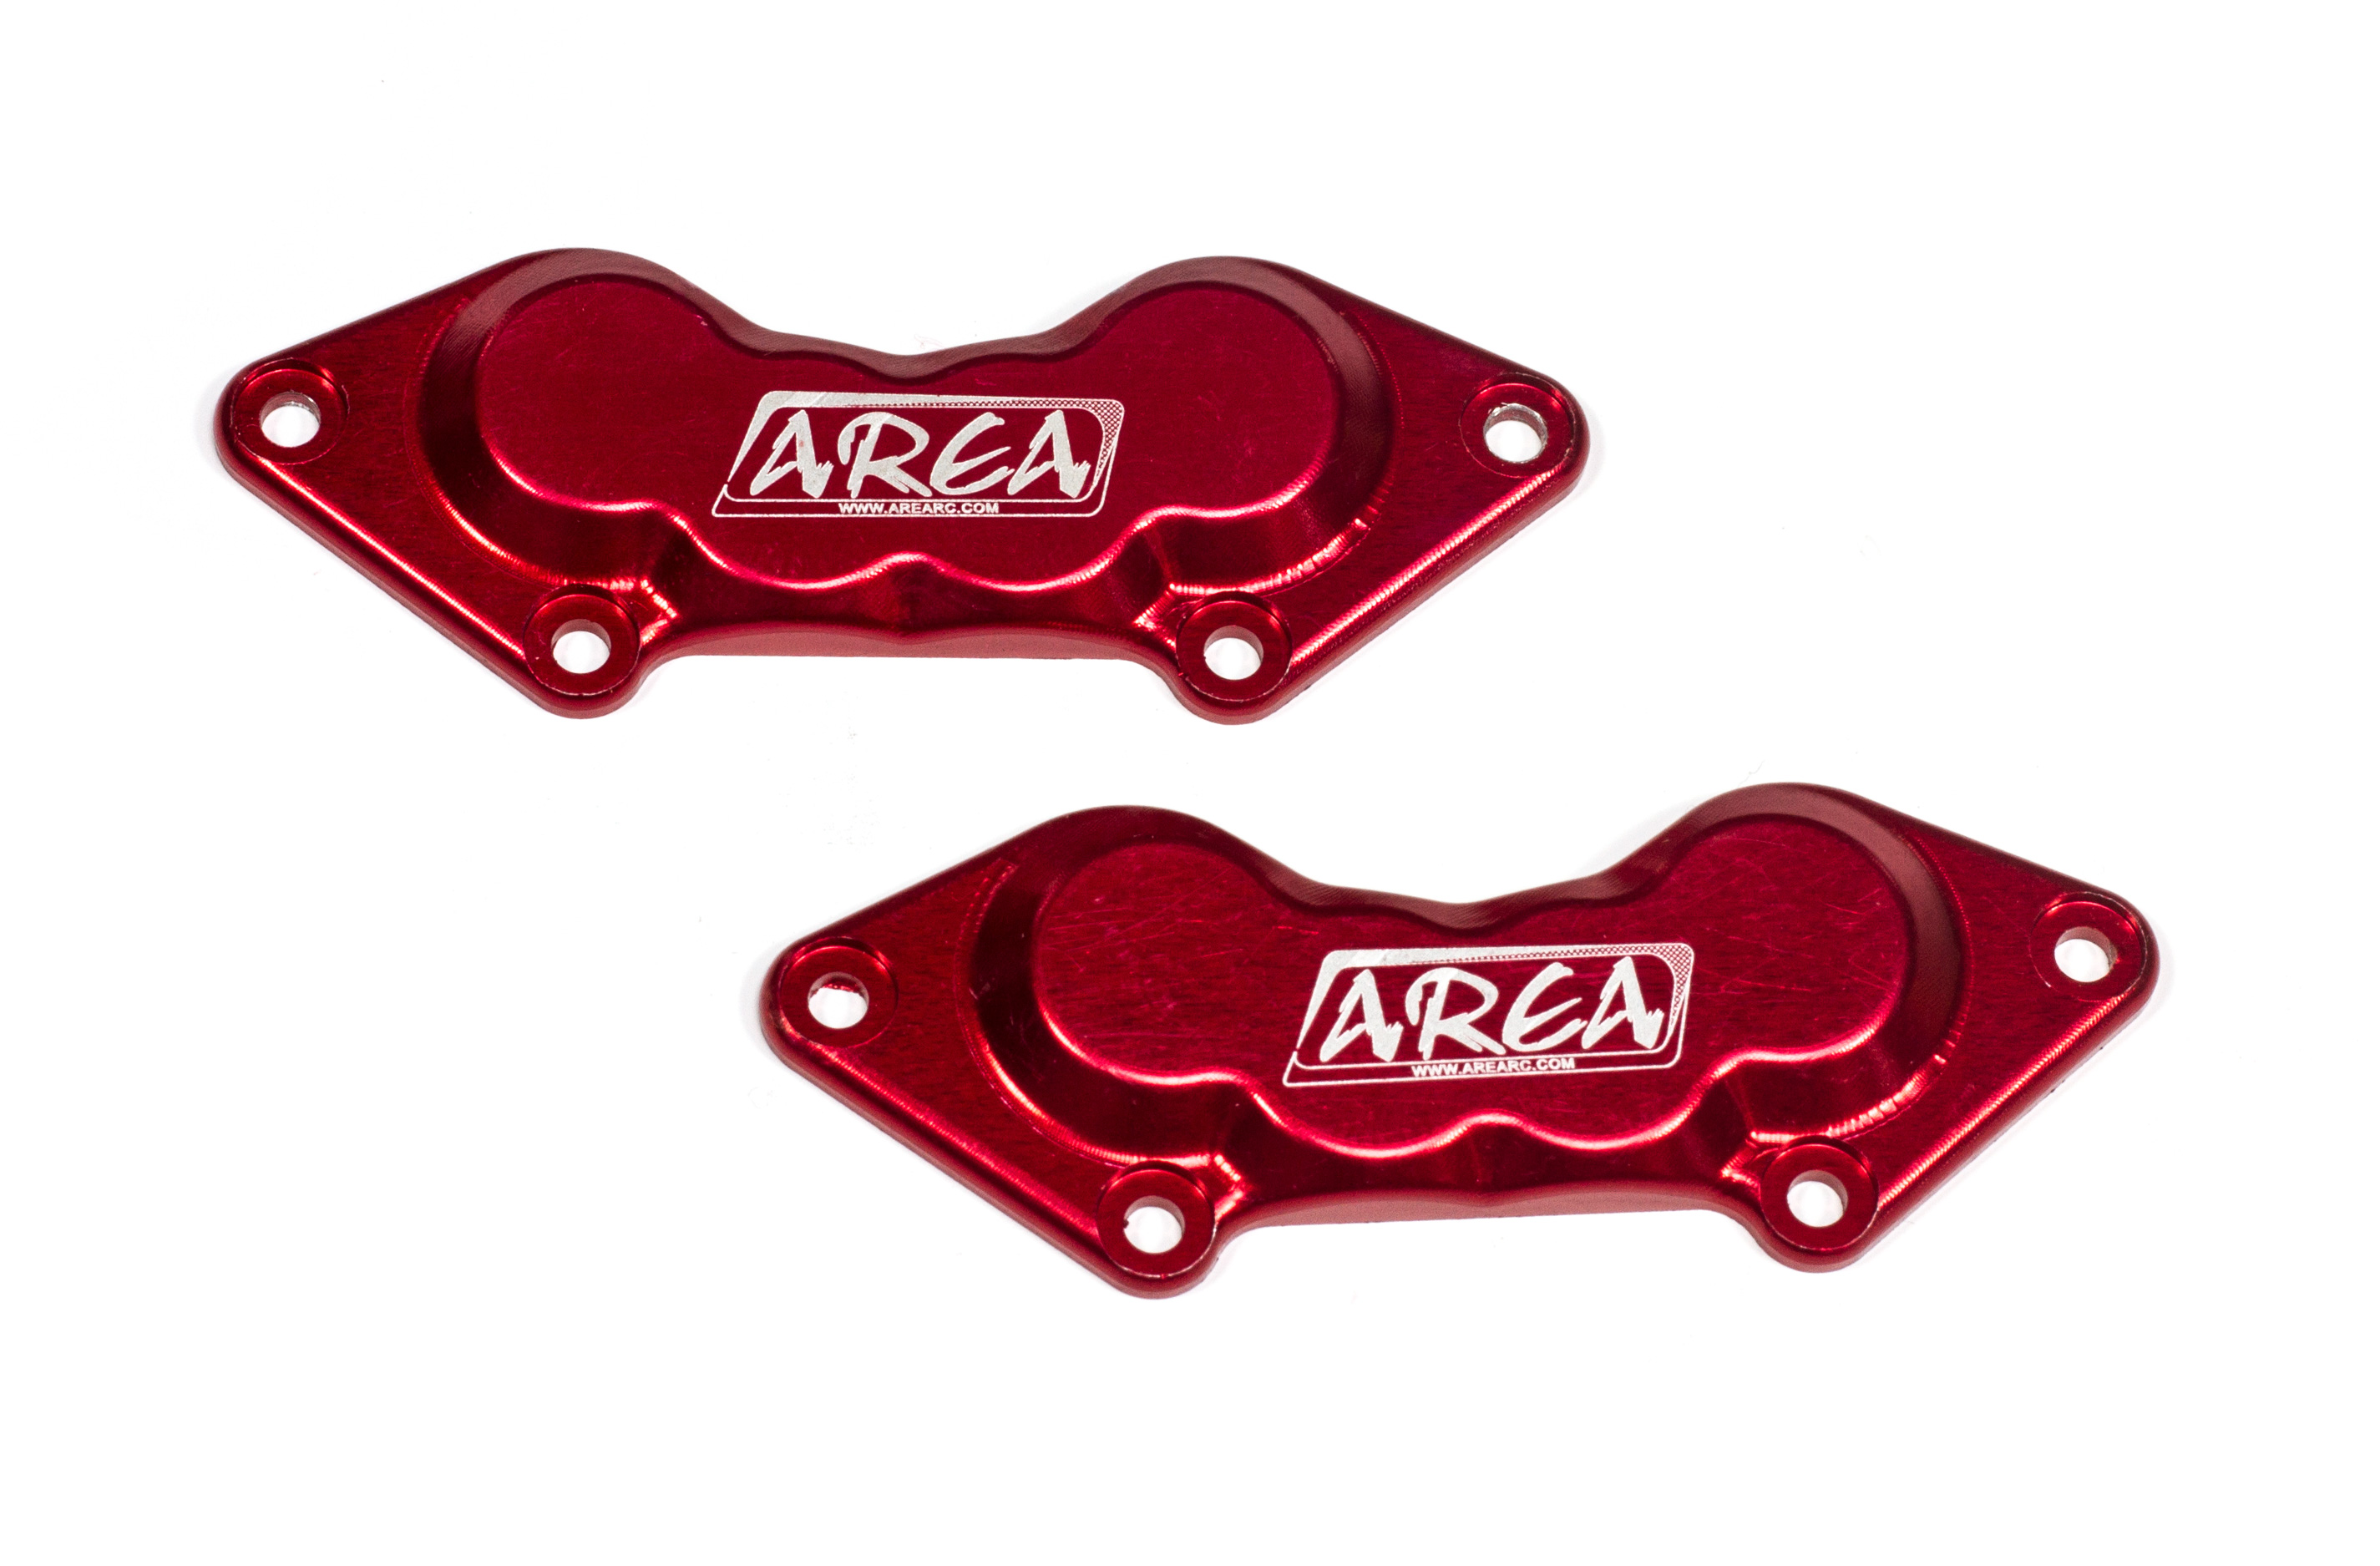 AREA-BJ029/04 Brake caliper cover